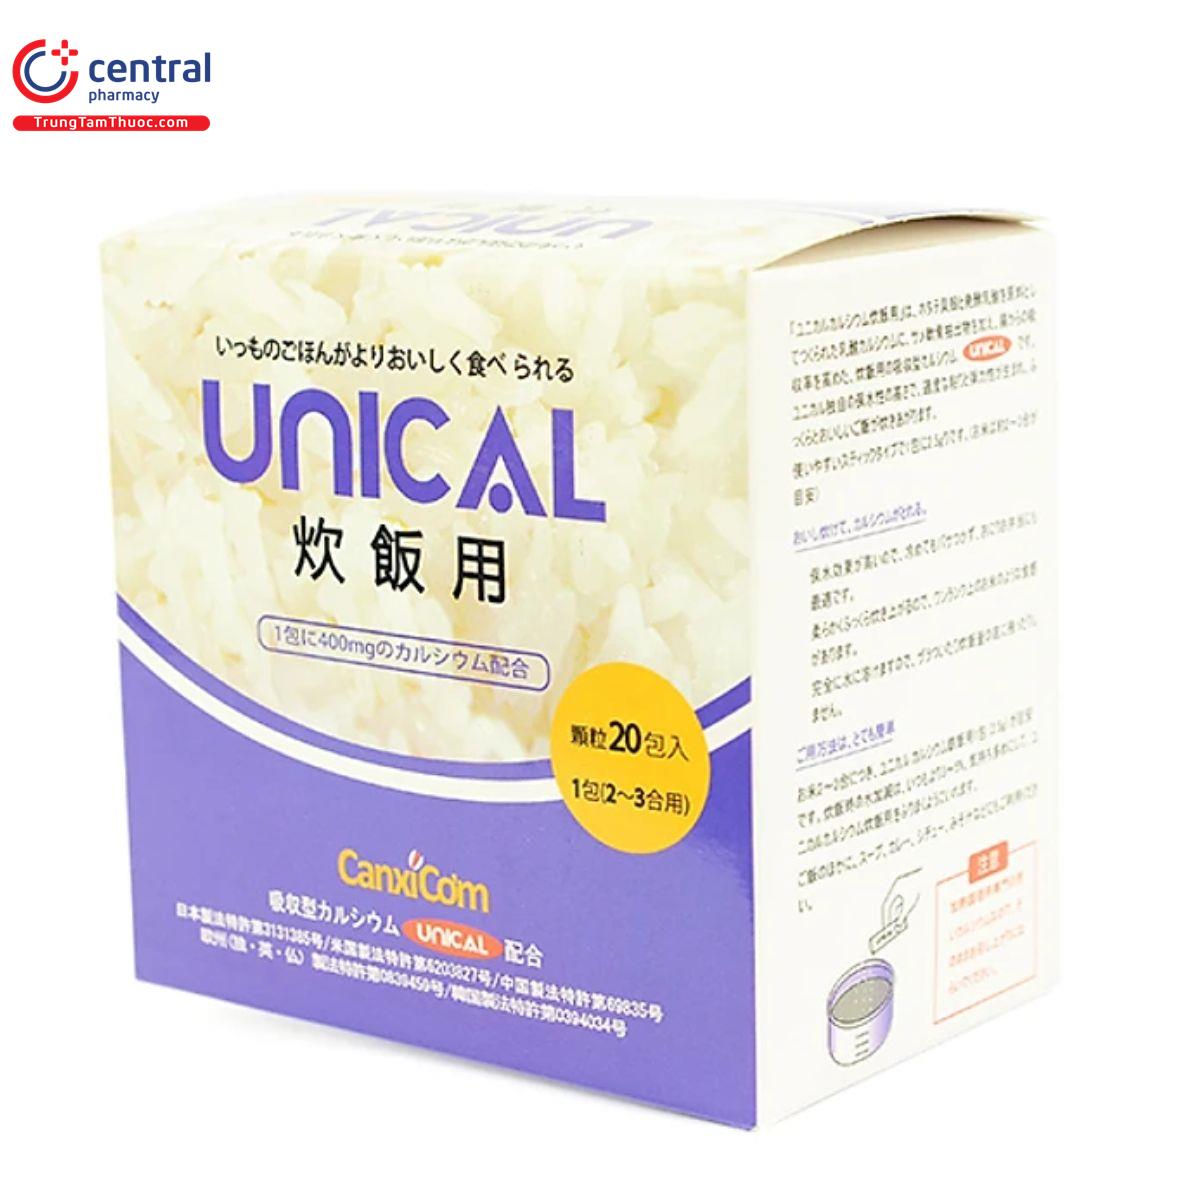 unical canxi com 7 D1018